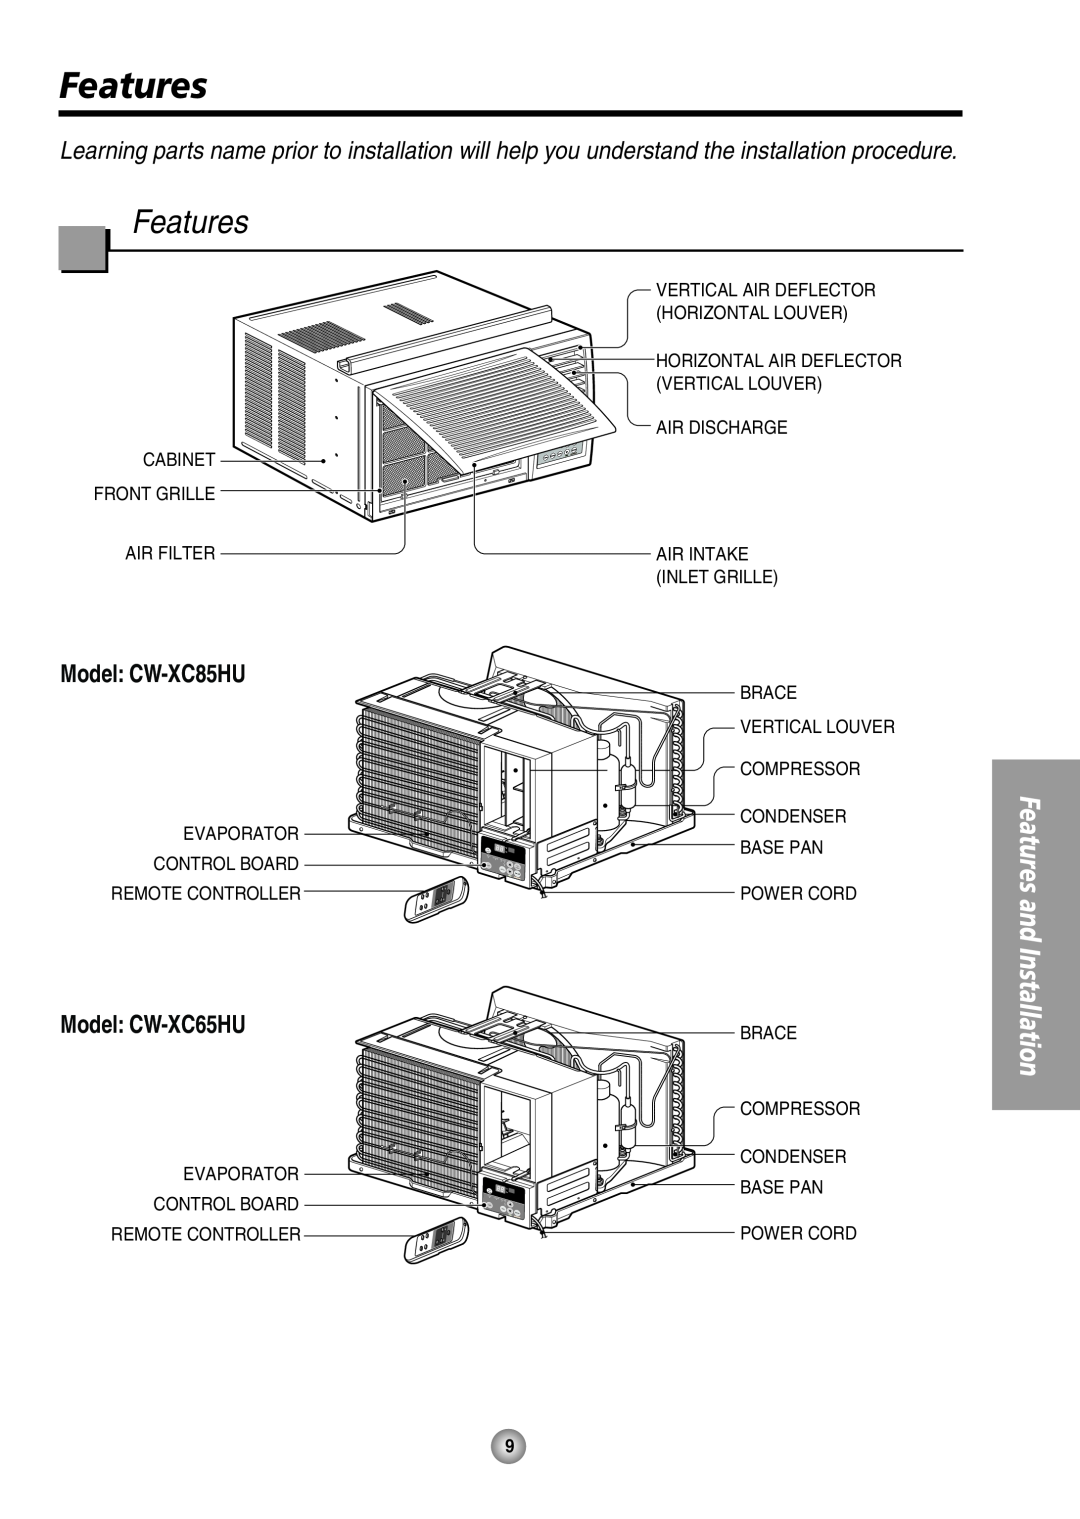 Panasonic manual Model CW-XC65HU, Features and Installation, Model CW-XC85HU 